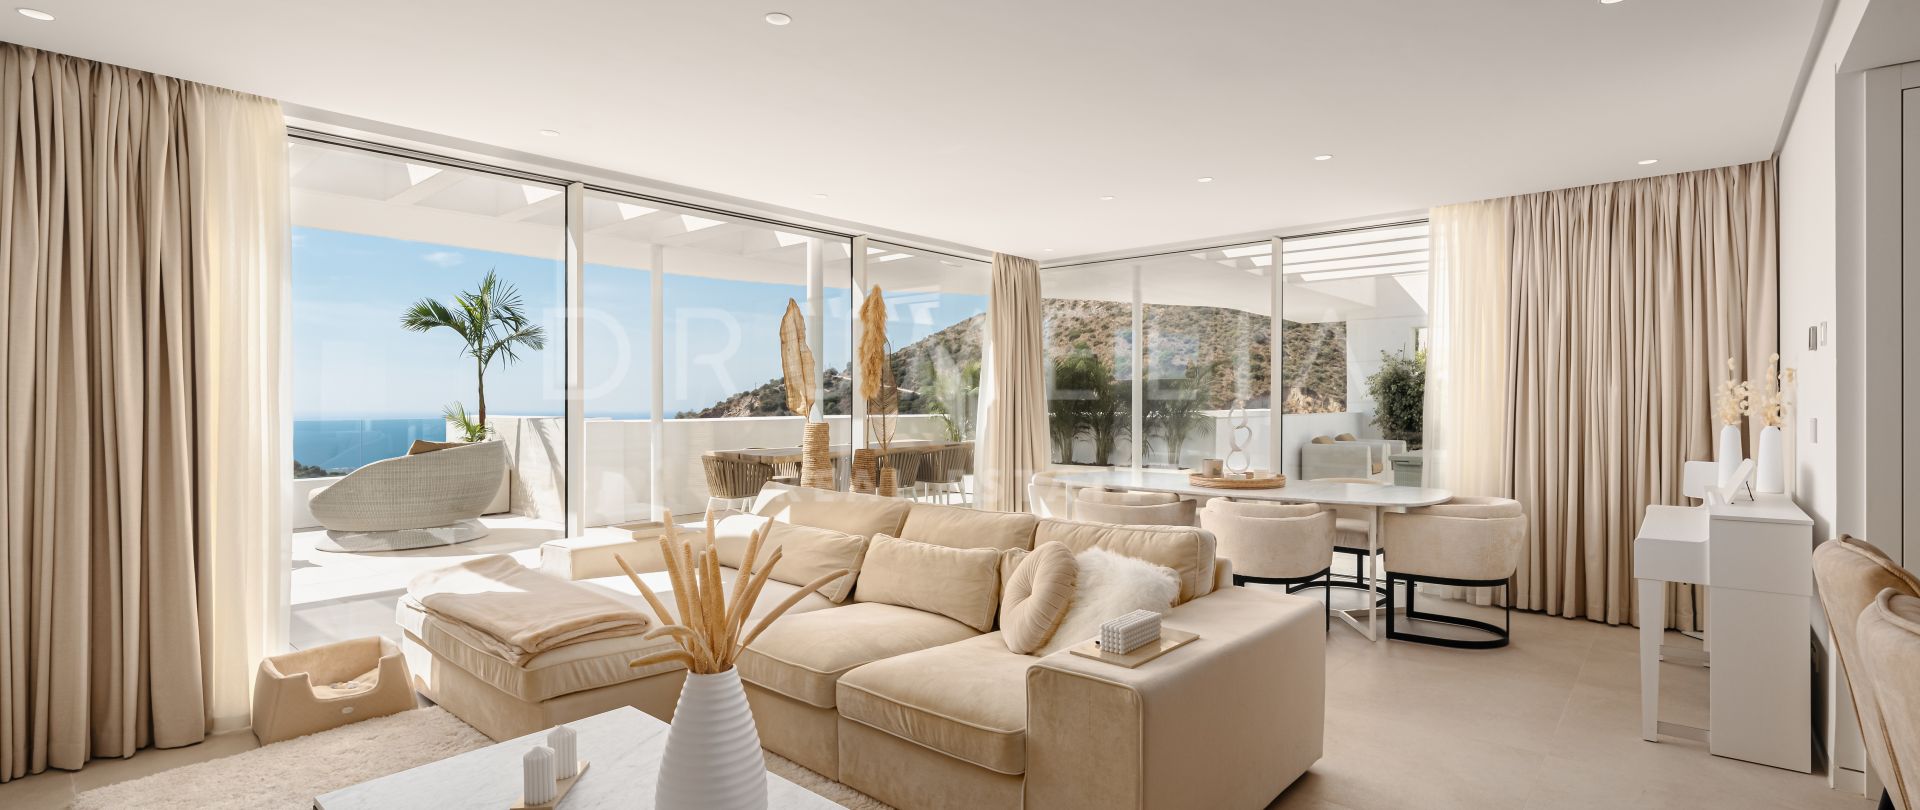 YOZORA VIEWS - Yozora Views - Modern duplex penthouse with panoramic views for luxurious lifestyle, Palo Alto, Ojen